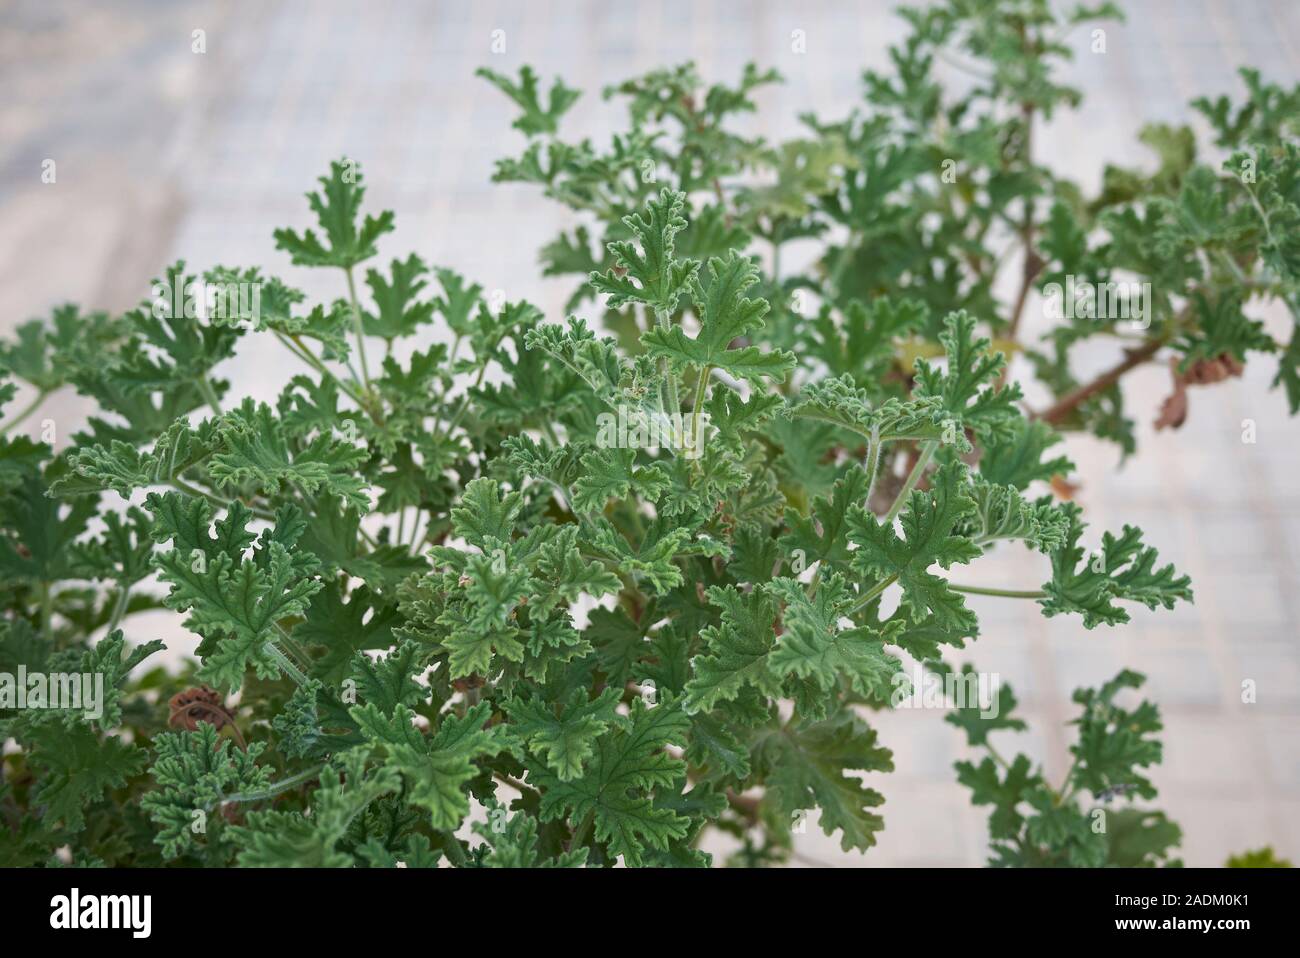 Grünen duftenden Blätter von Pelargonium graveolens Pflanze Stockfoto